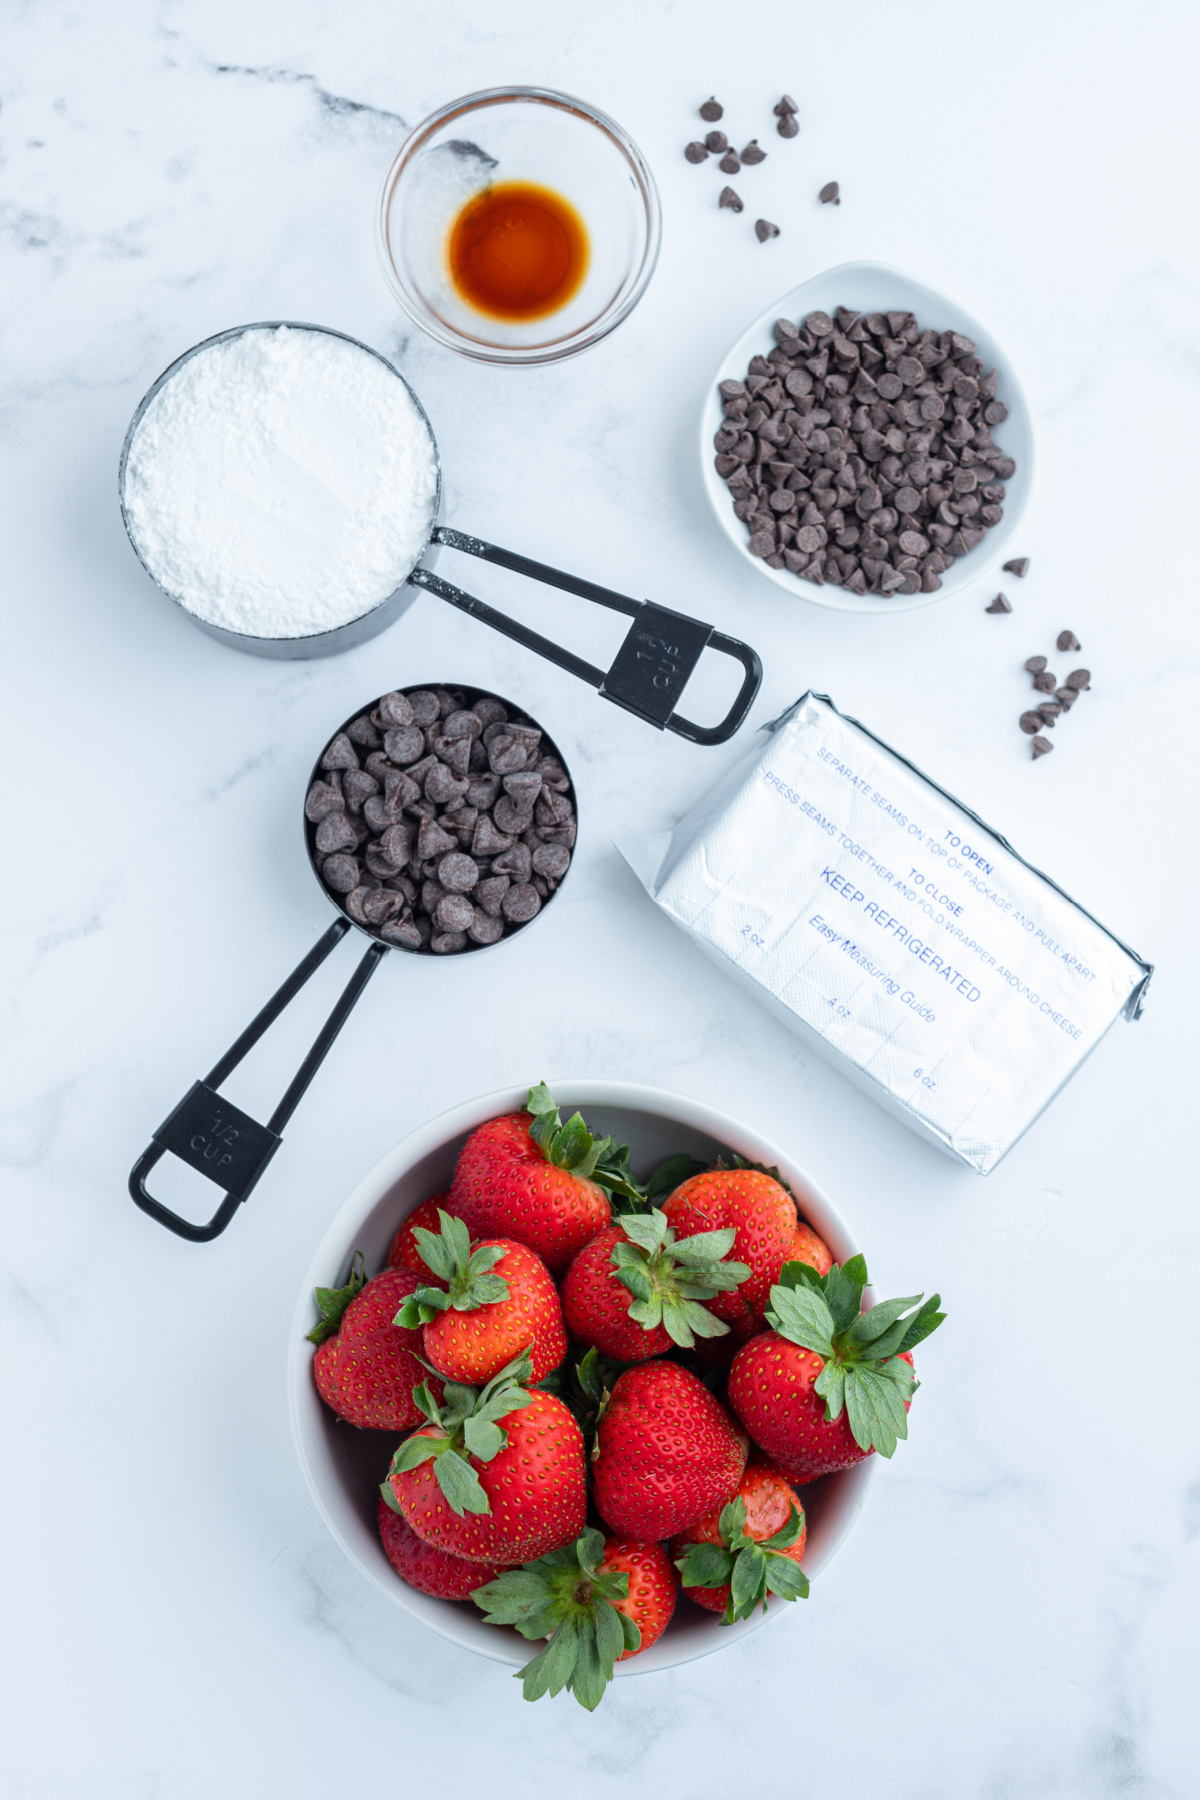 ingredients displayed for making chocolate cheesecake strawberry bites